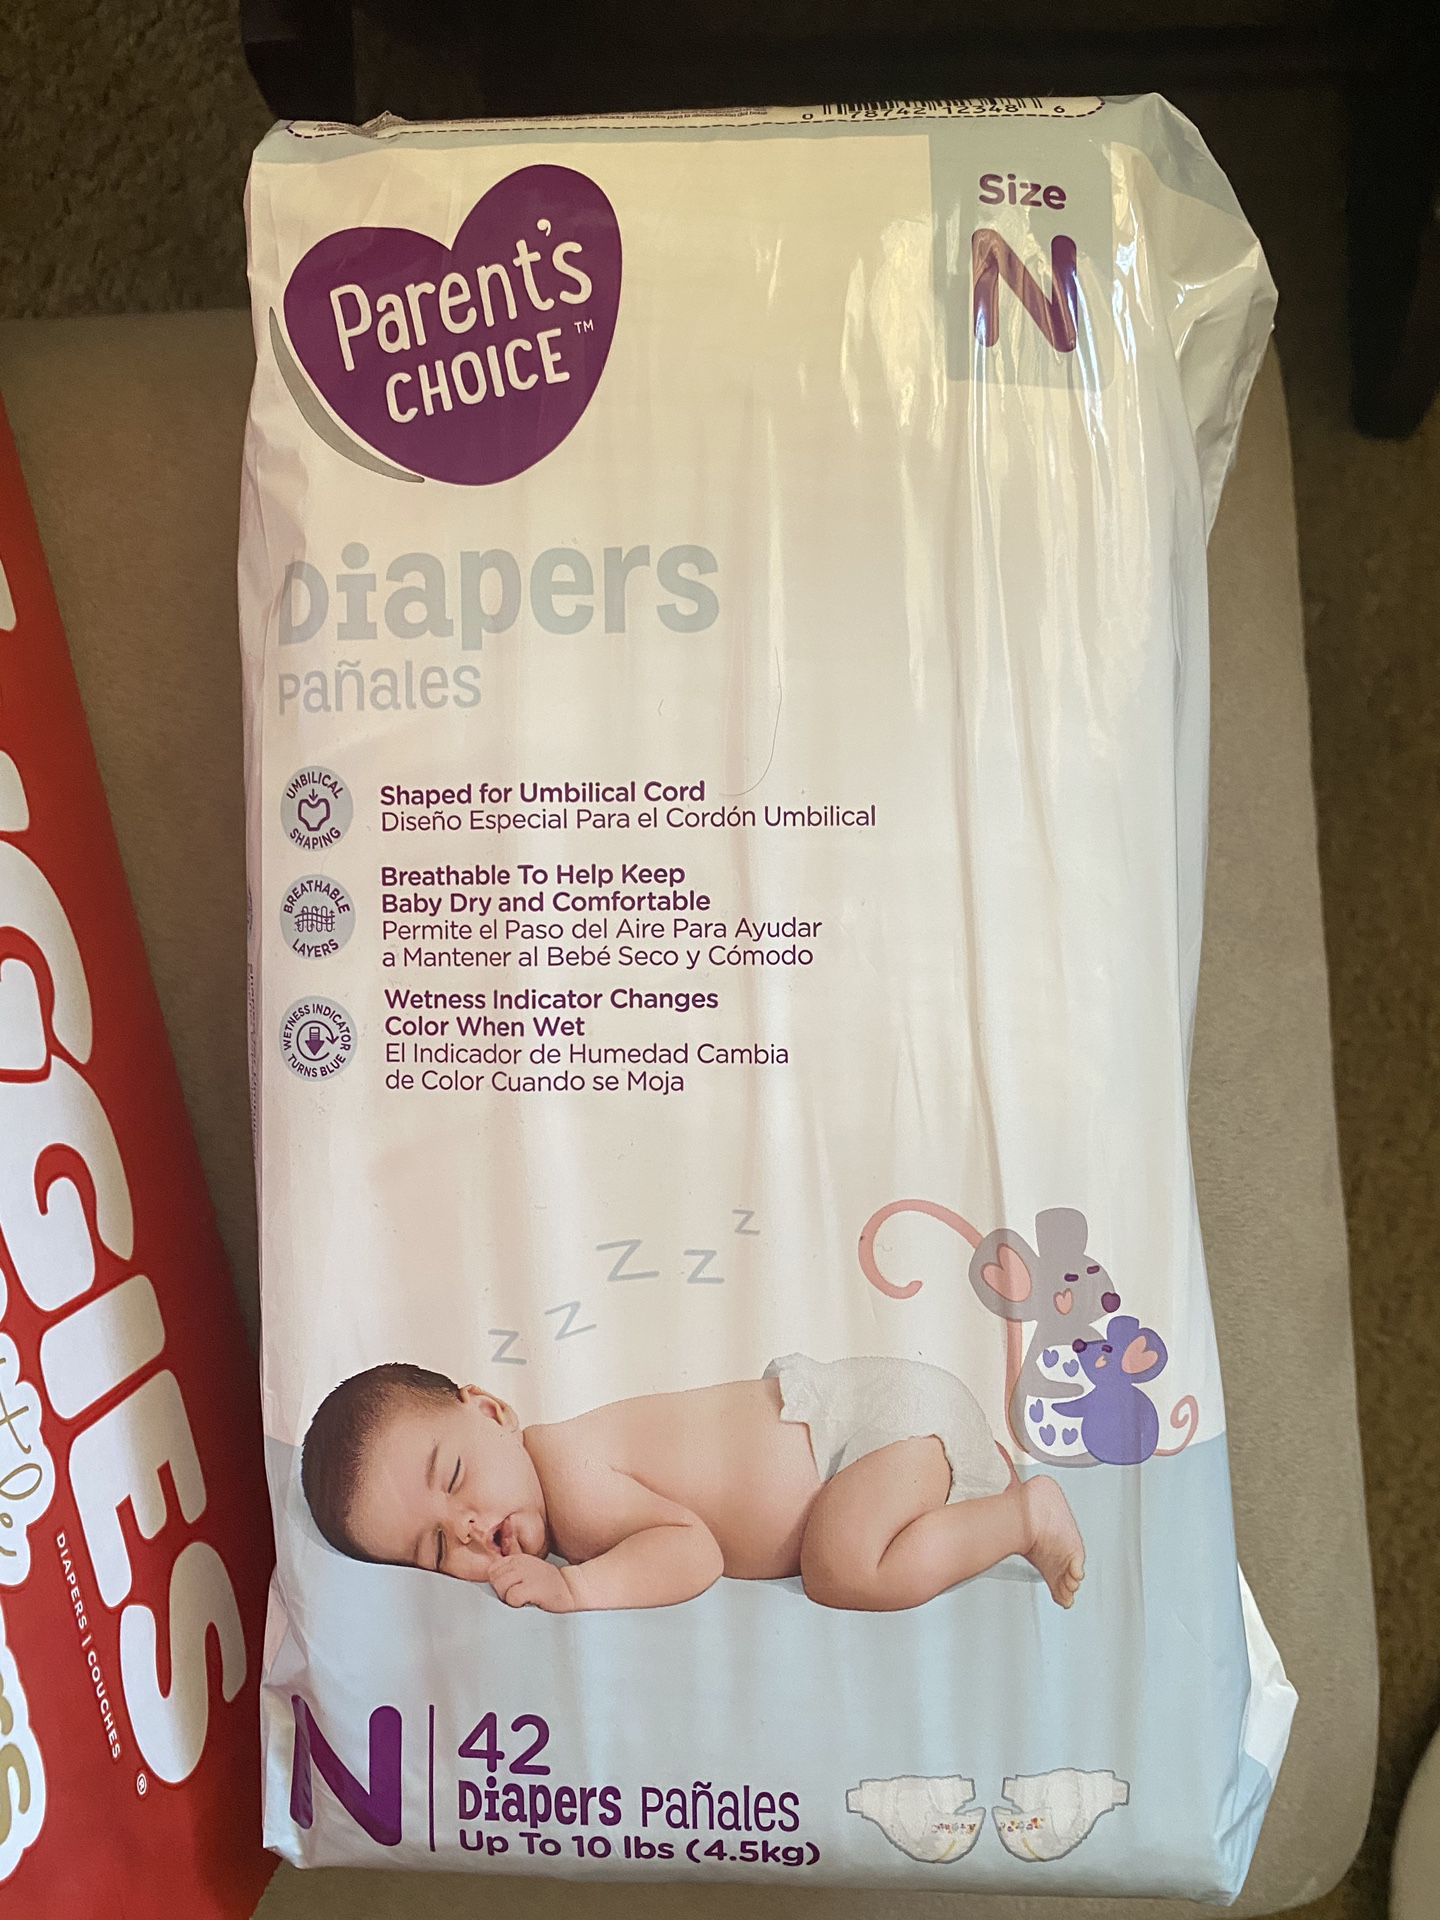 Parents choice diapers